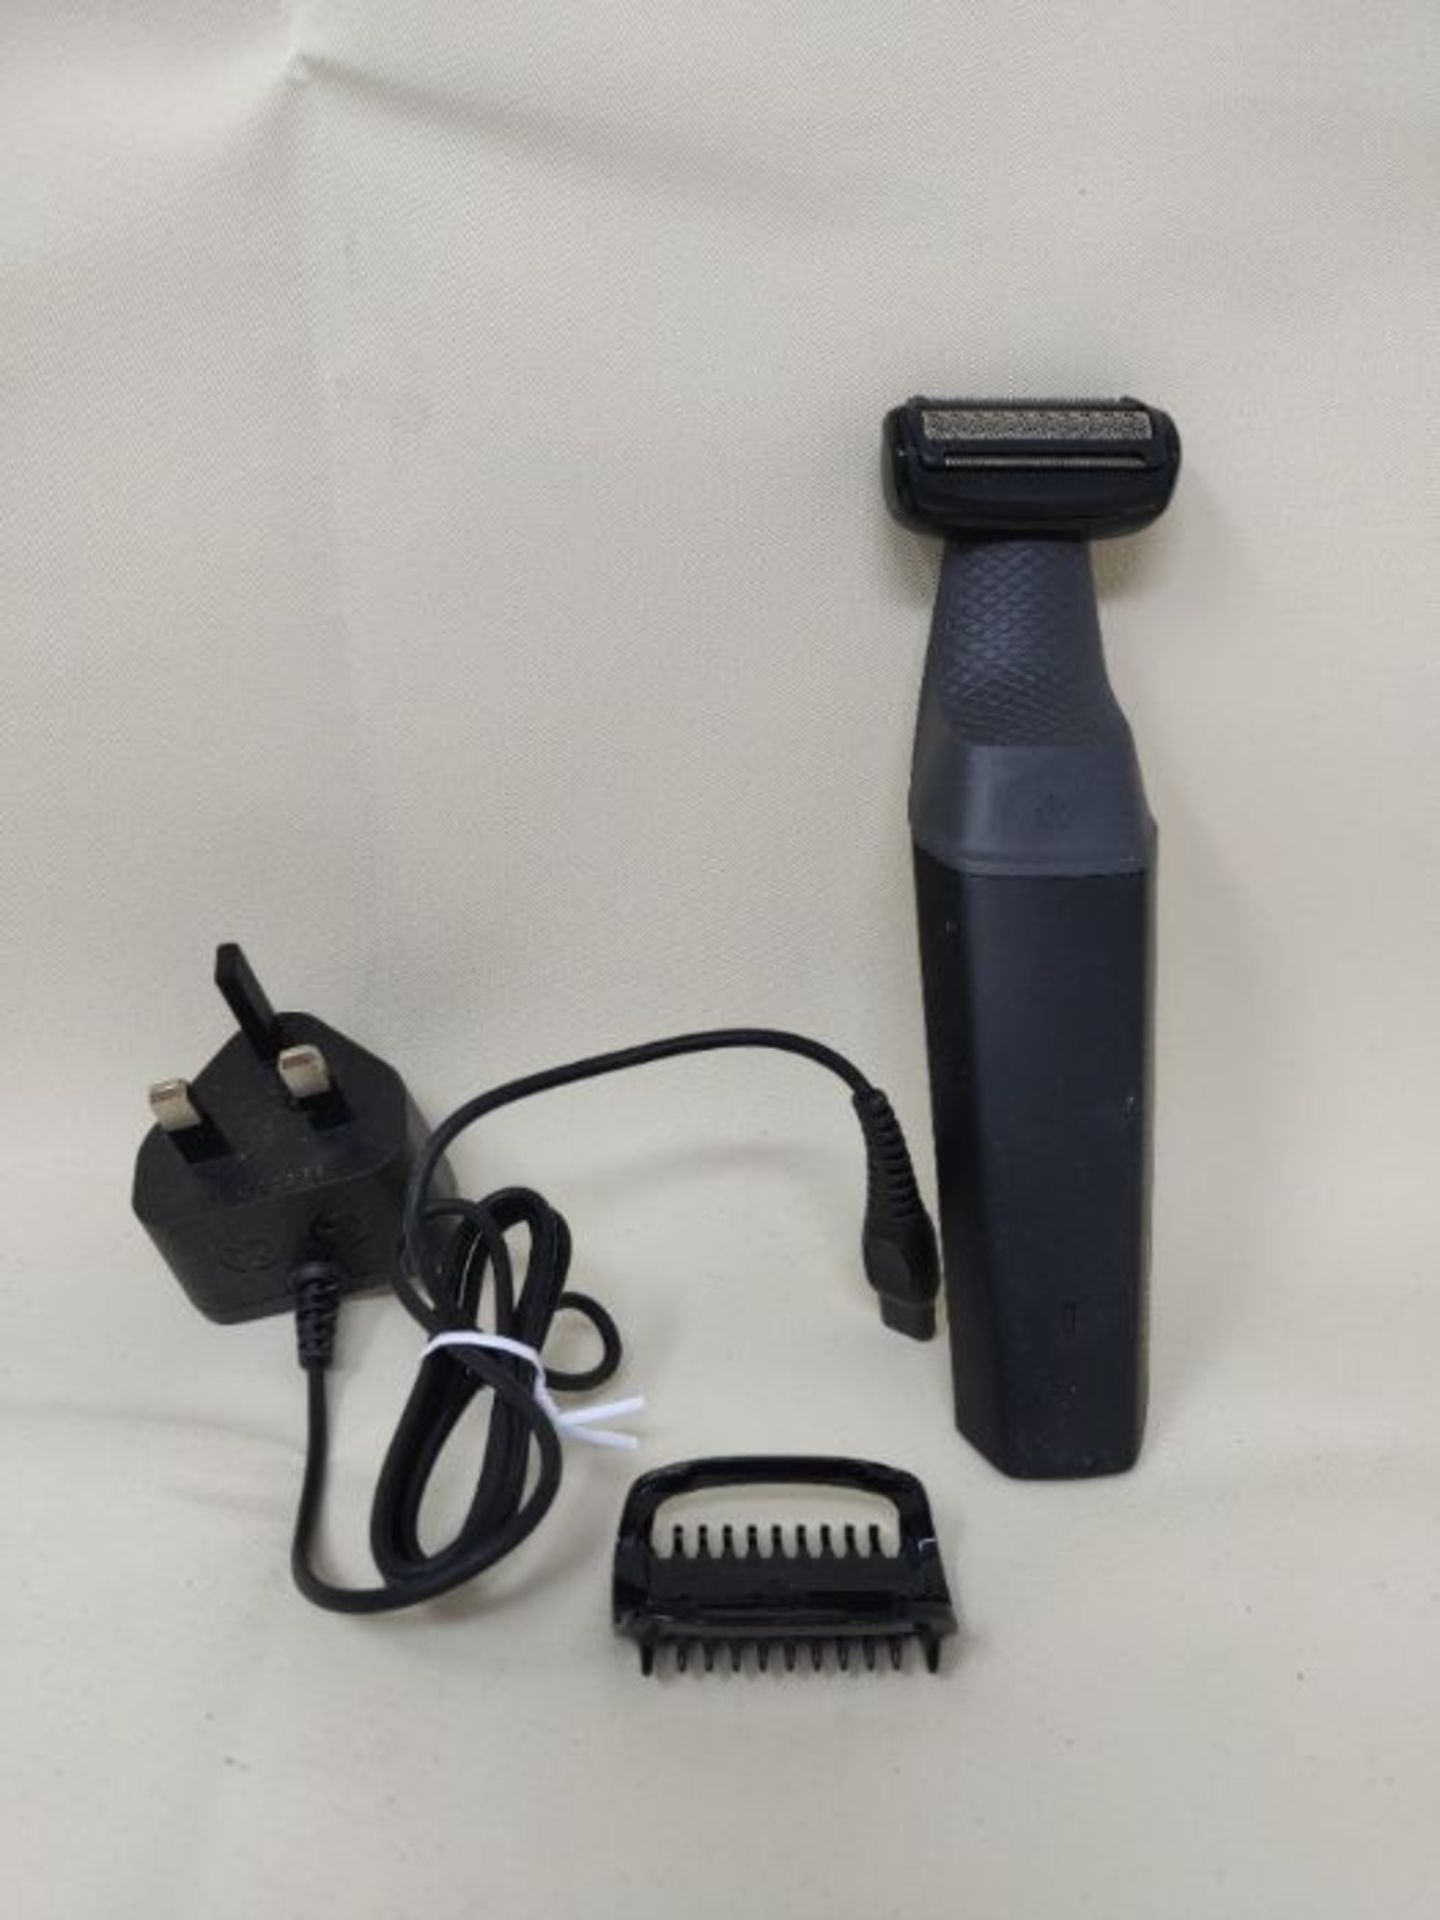 Philips Series 3000 Showerproof Body Groomer with Skin Comfort System - BG3010/13 - Image 3 of 3